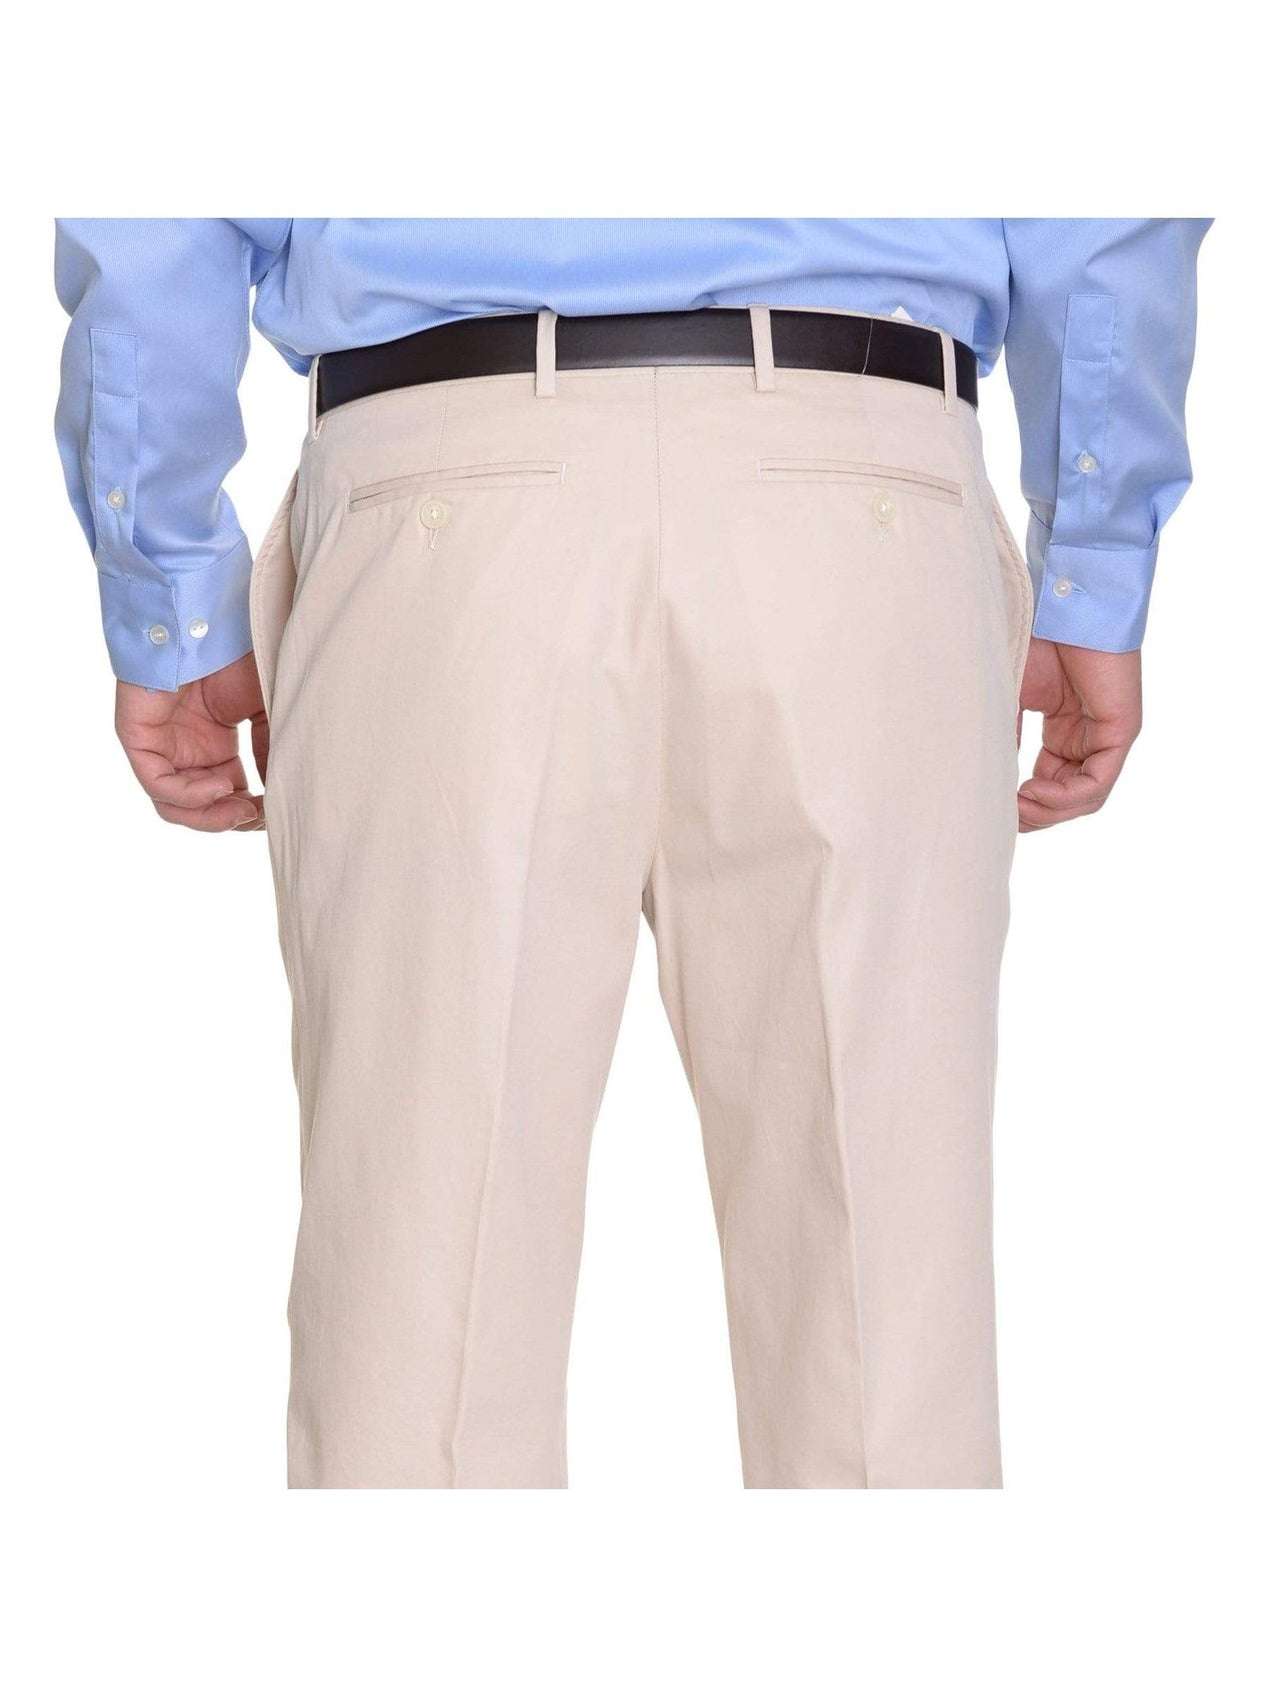 Crespi PANTS Crespi Classic Fit Solid Light Beige Khaki Flat Front Cotton Casual Pants